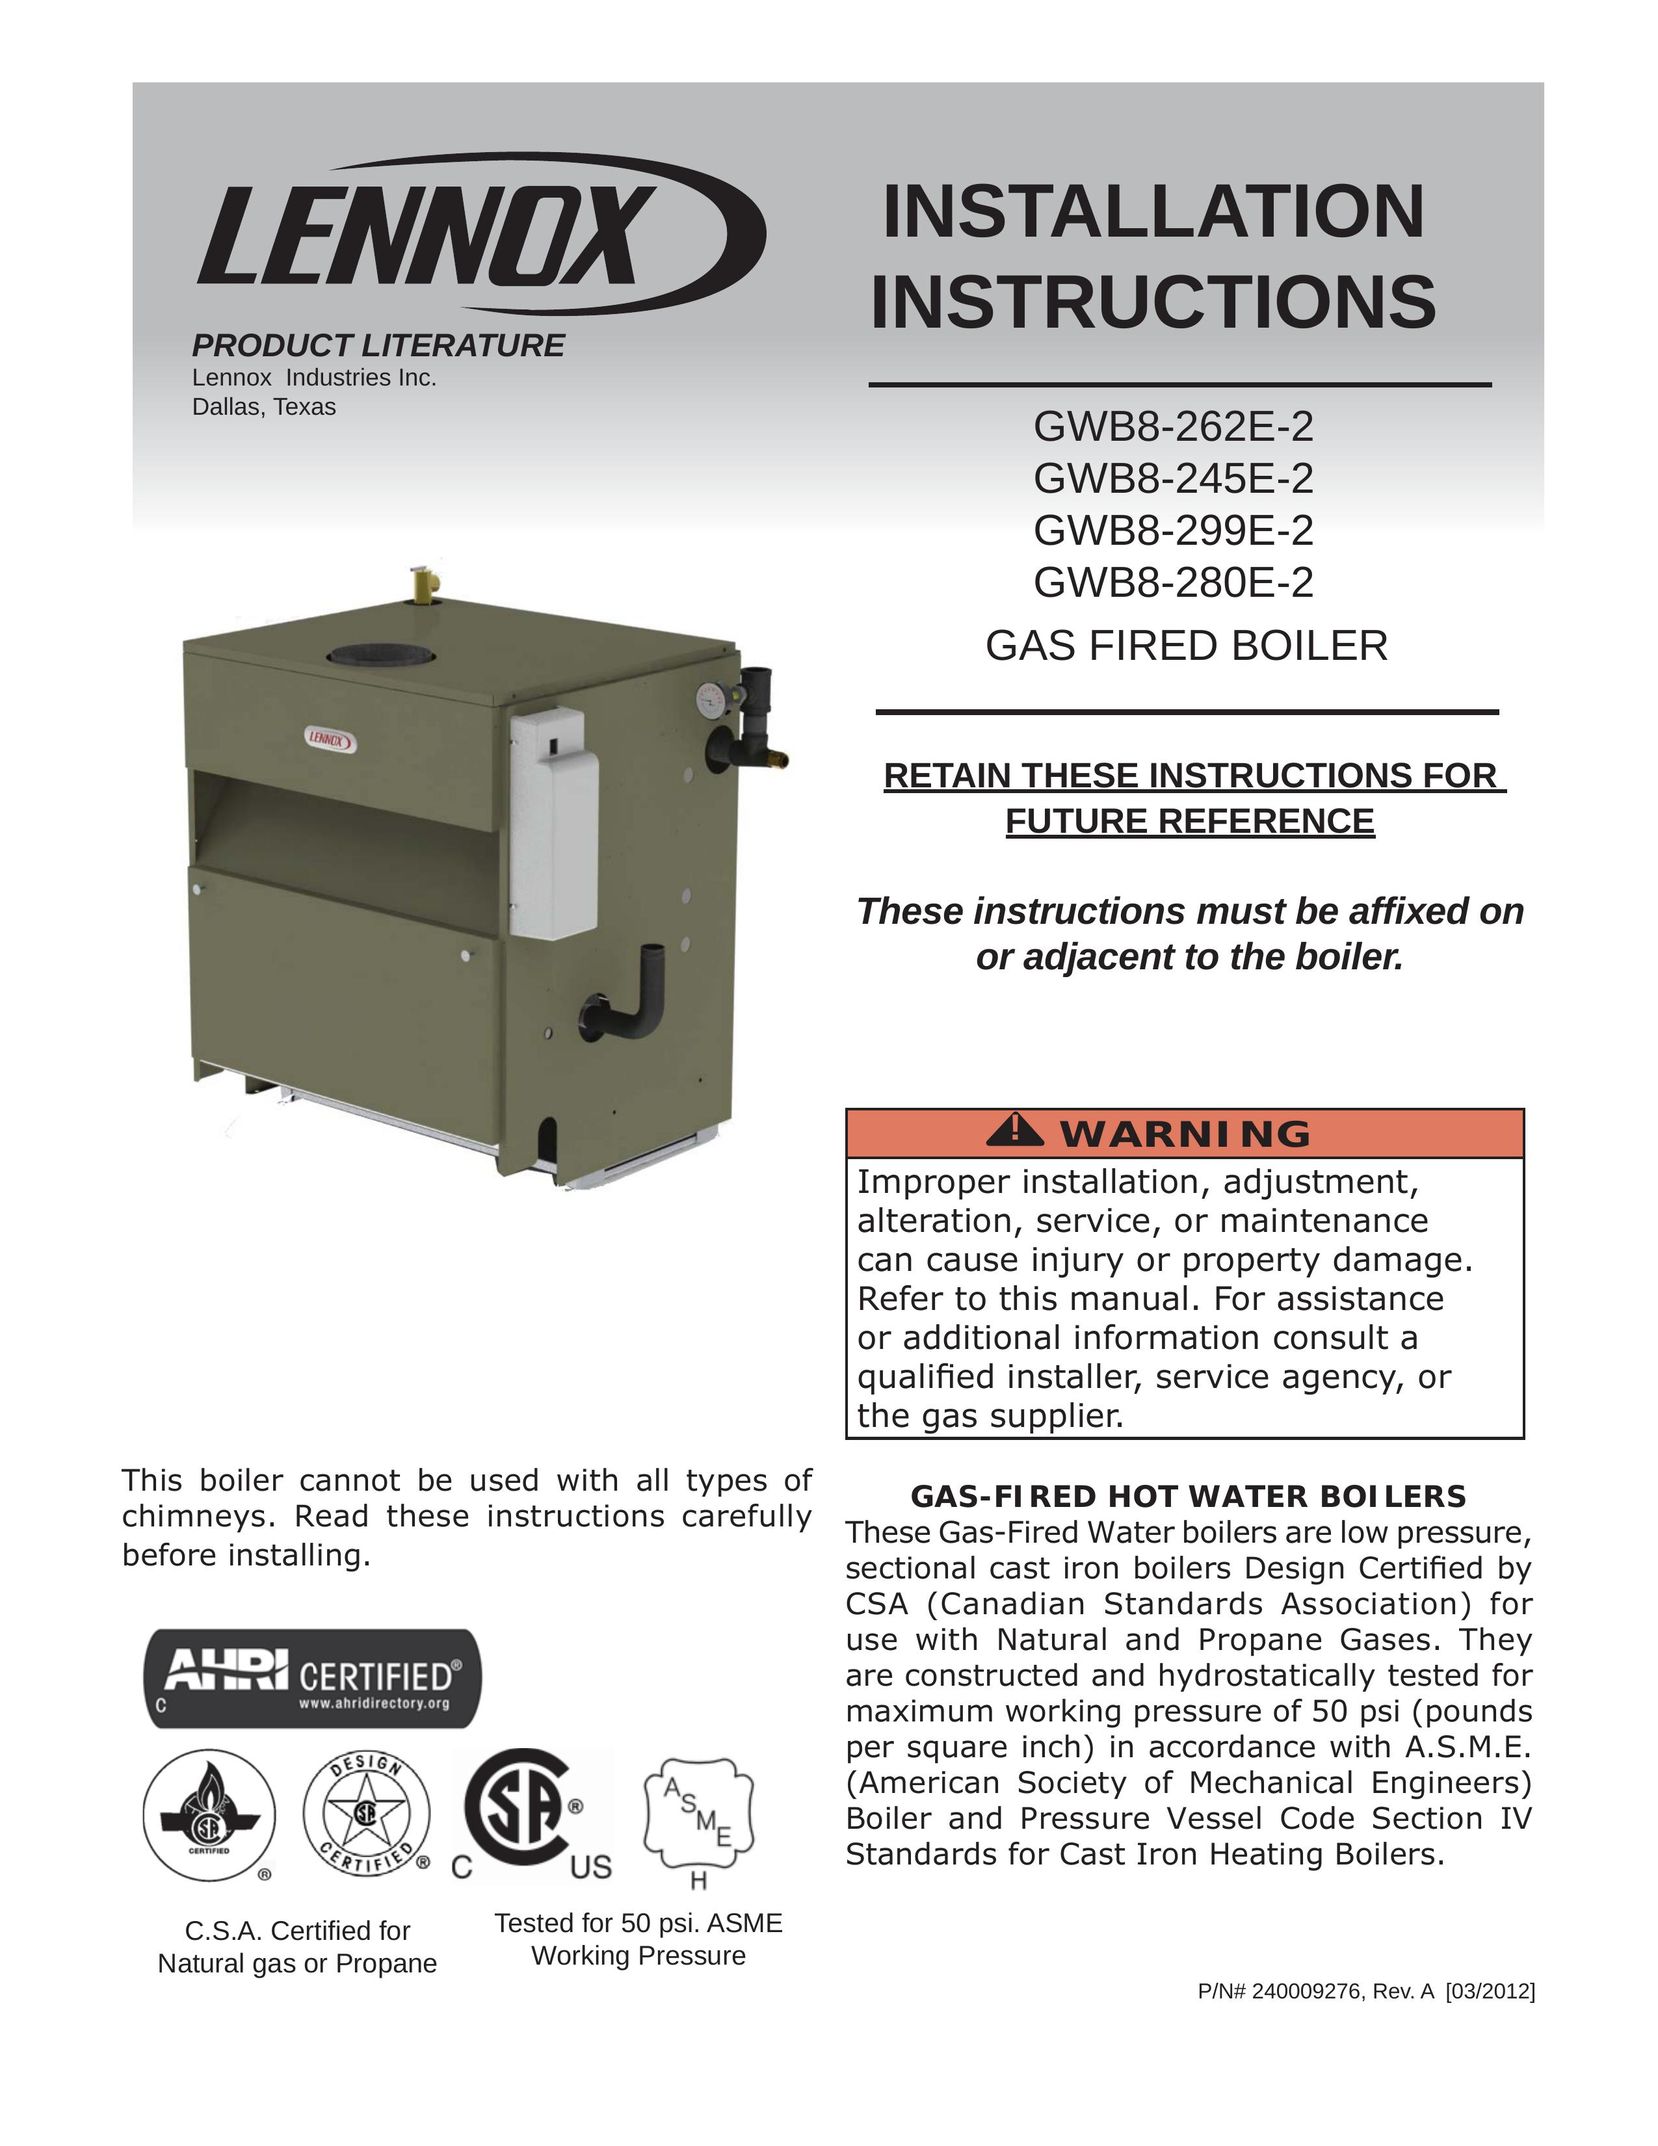 Lennox International Inc. GWB8-245E-2 Boiler User Manual